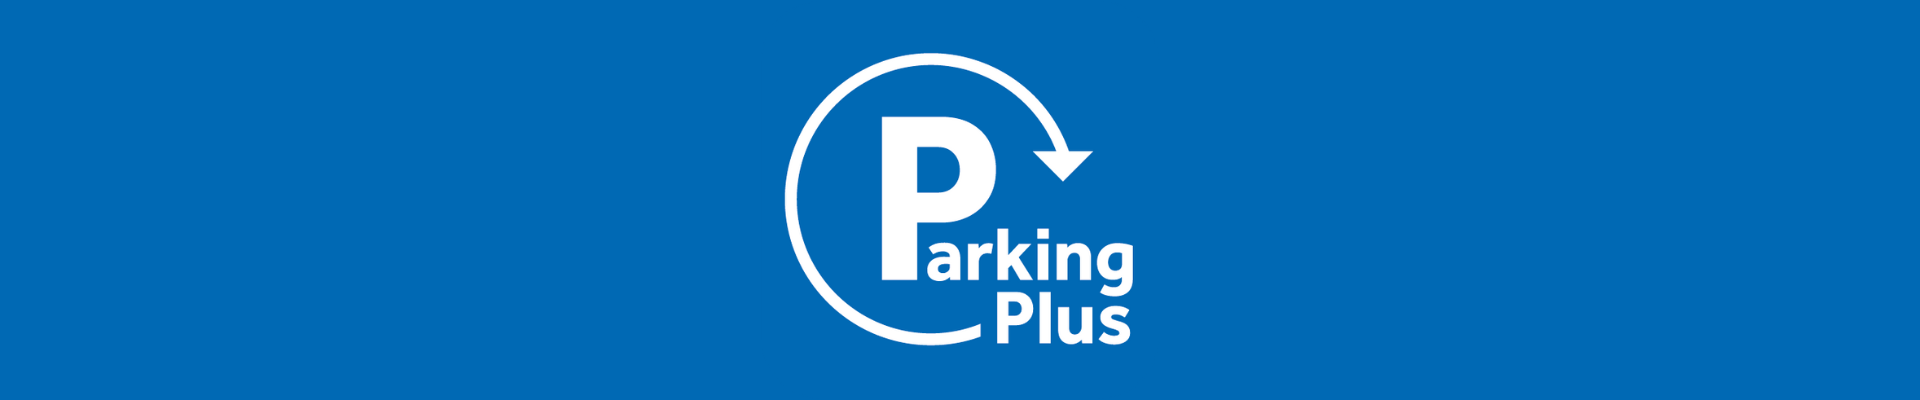 ParkingPlus